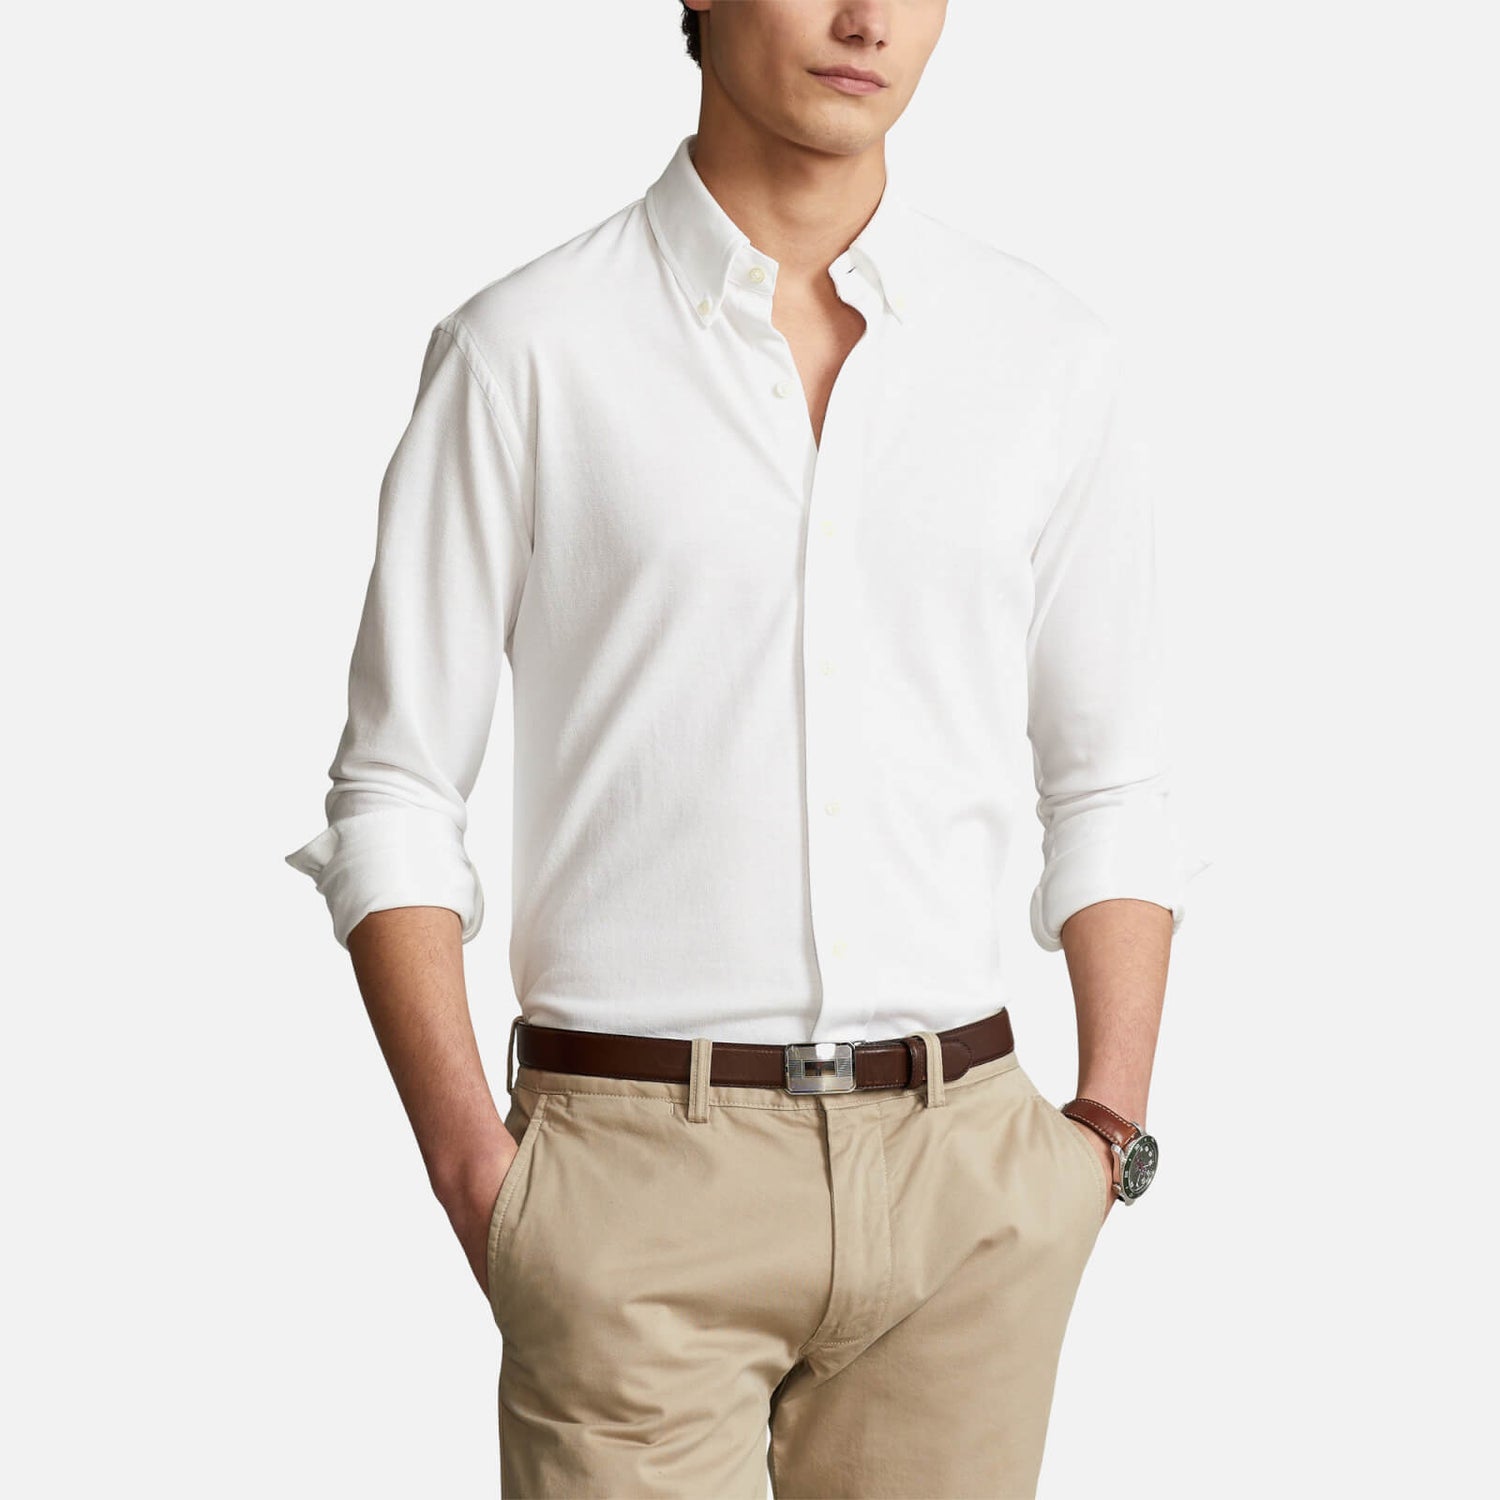 Polo Ralph Lauren Men's Oxford Mesh Shirt - White